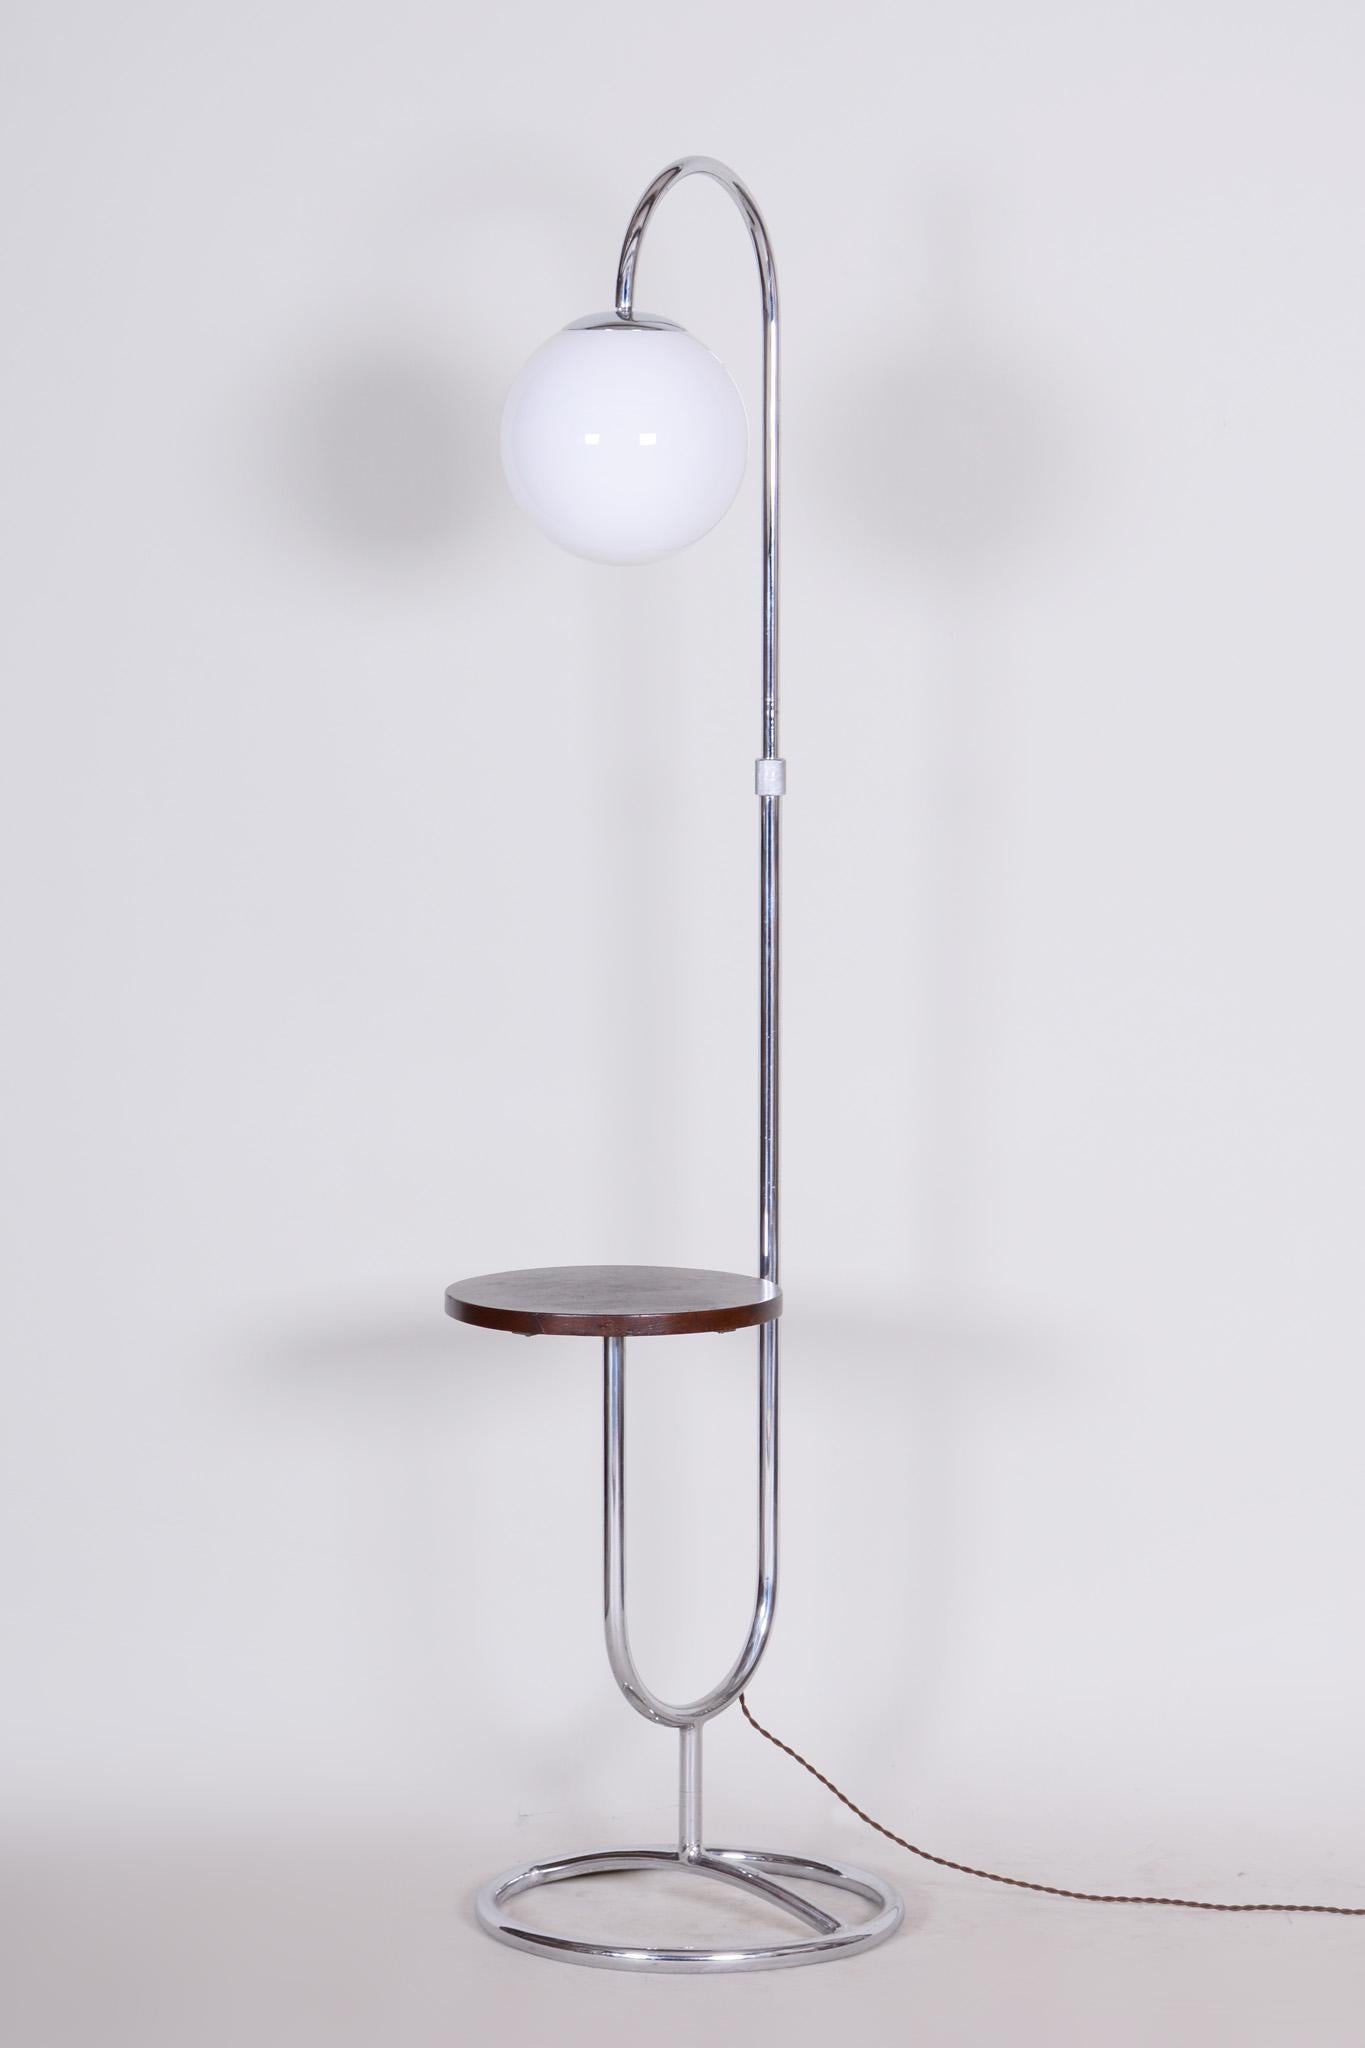 Chrome lamp. European Plug (up to 250V)
New electrification.

Style: Bauhaus.
Period: 1930-1939.
Material: Chrome-plated steel, milk glass
Maker: Hynek Gottwald.